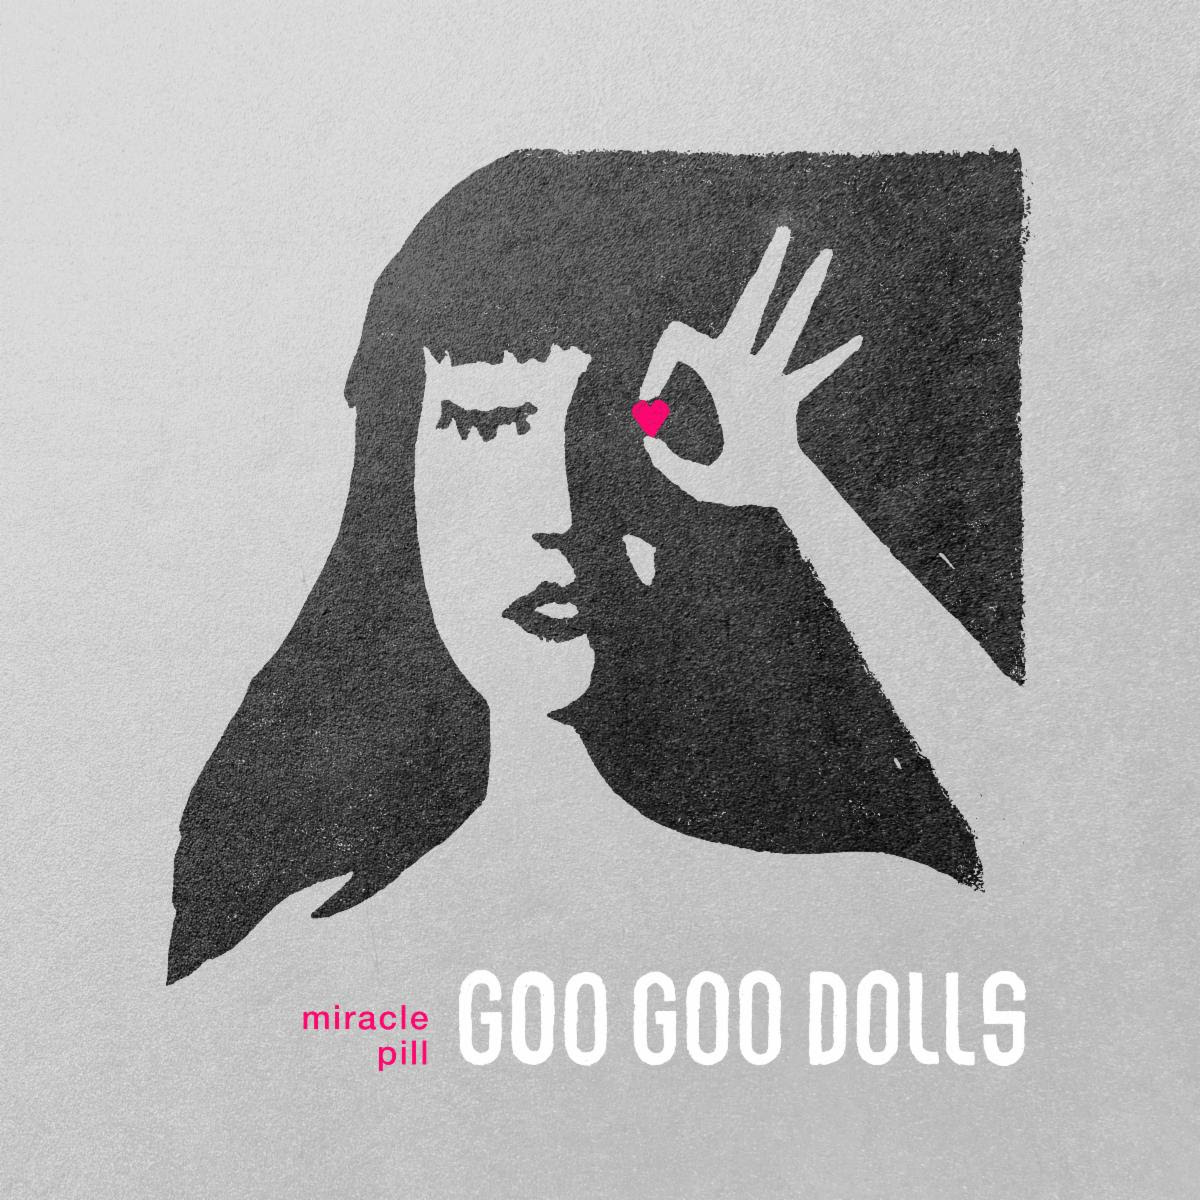 Goo Goo Dolls, `Miracle Pill (Deluxe Edition)` (Artwork courtesy of Warner Records/BB Gun PR)